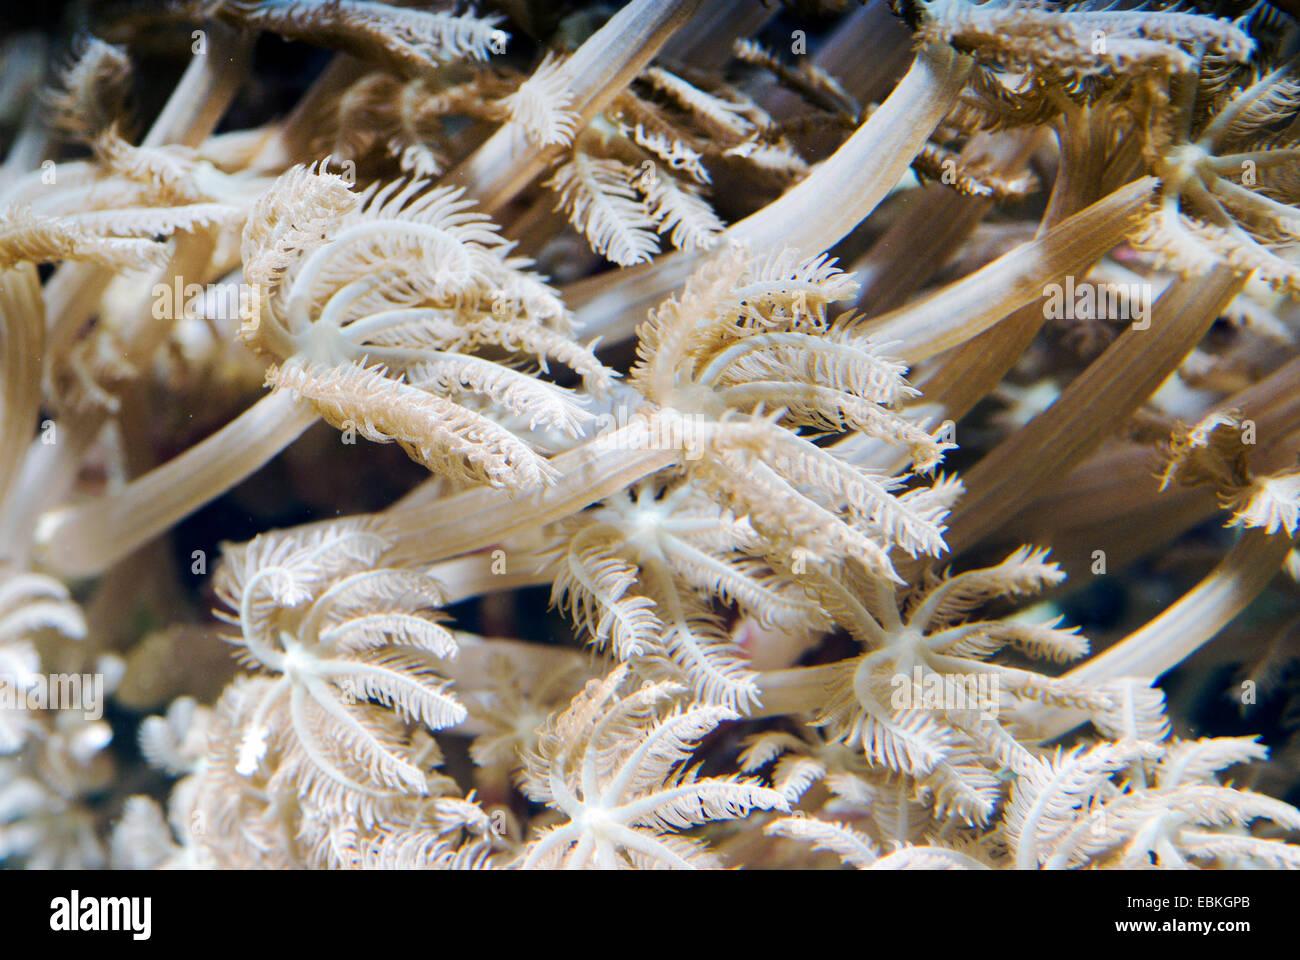 clove-polyp-soft-coral-anthelia-spec-close-up-view-EBKGPB.jpg